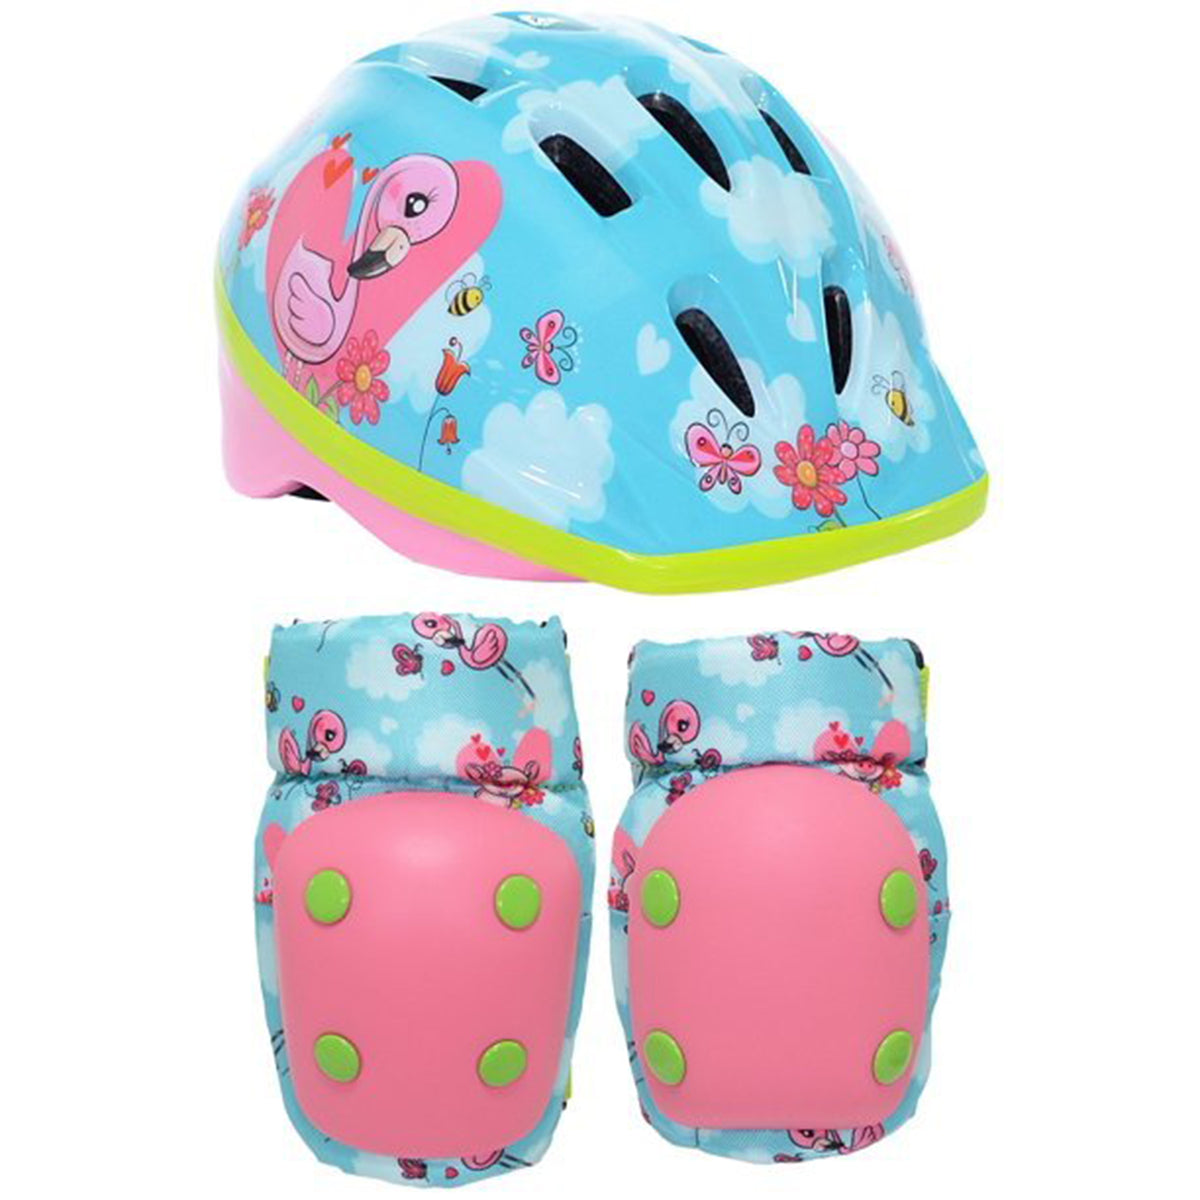 Kent Flamingo Pig Toddler Helmet & Pad Combo | Helmet & Pads for Kids Ages 1-3